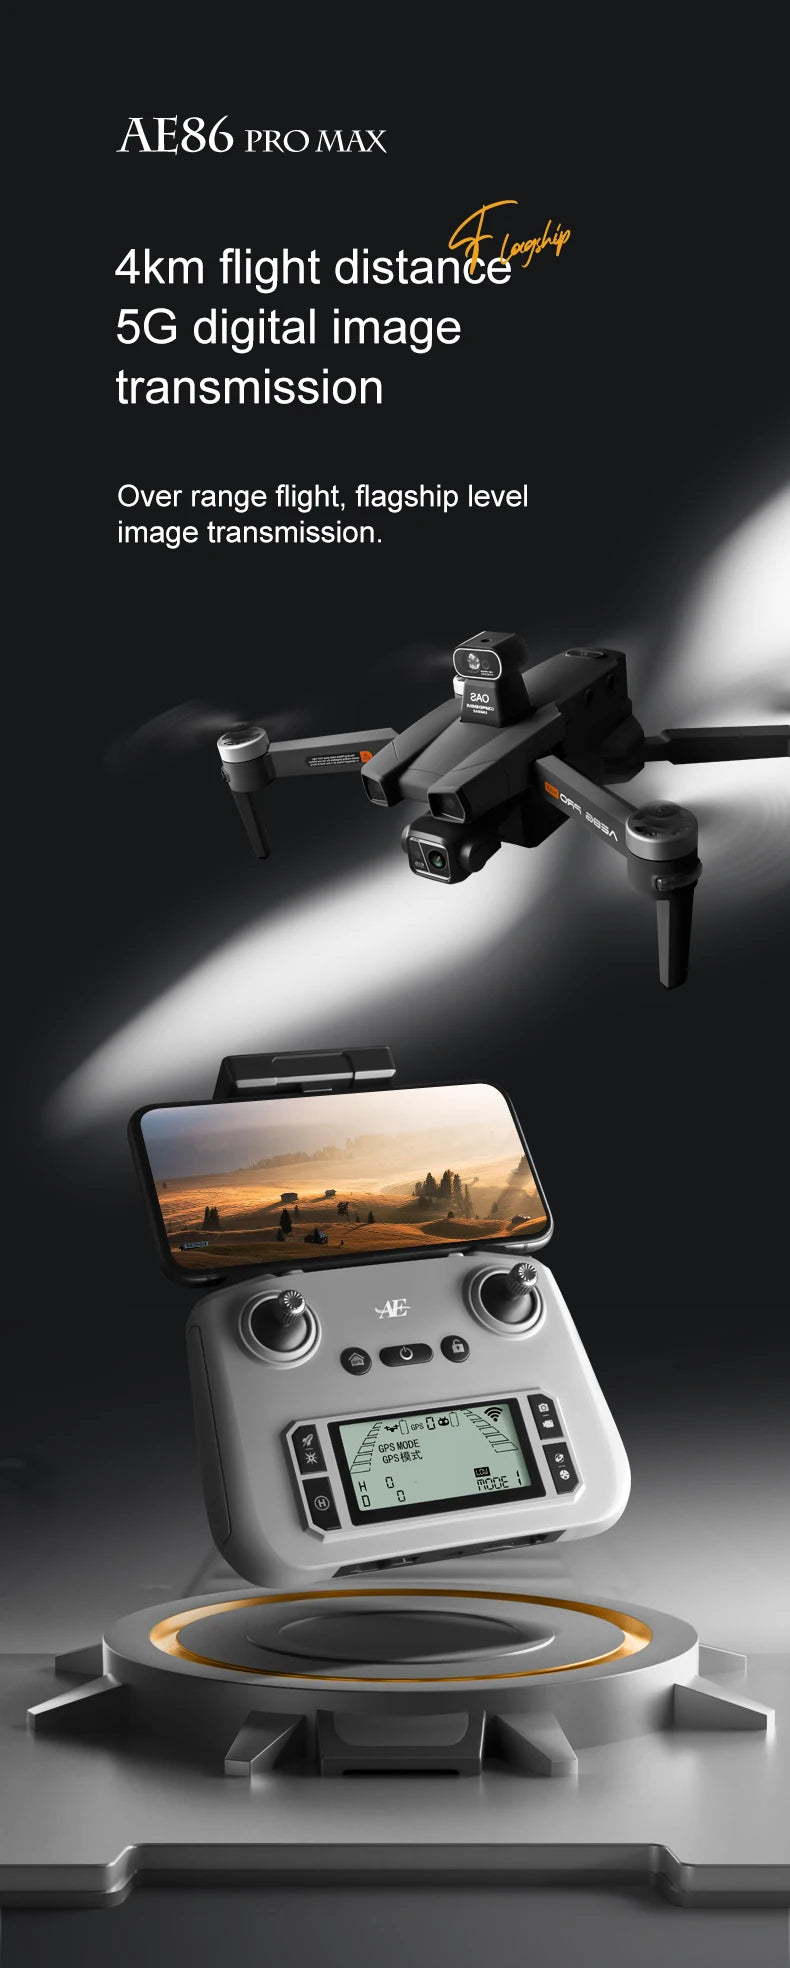 AE86 Pro Max Drone, AE86 PRO MAX 4km flight 5G digital image transmission . flagship level image